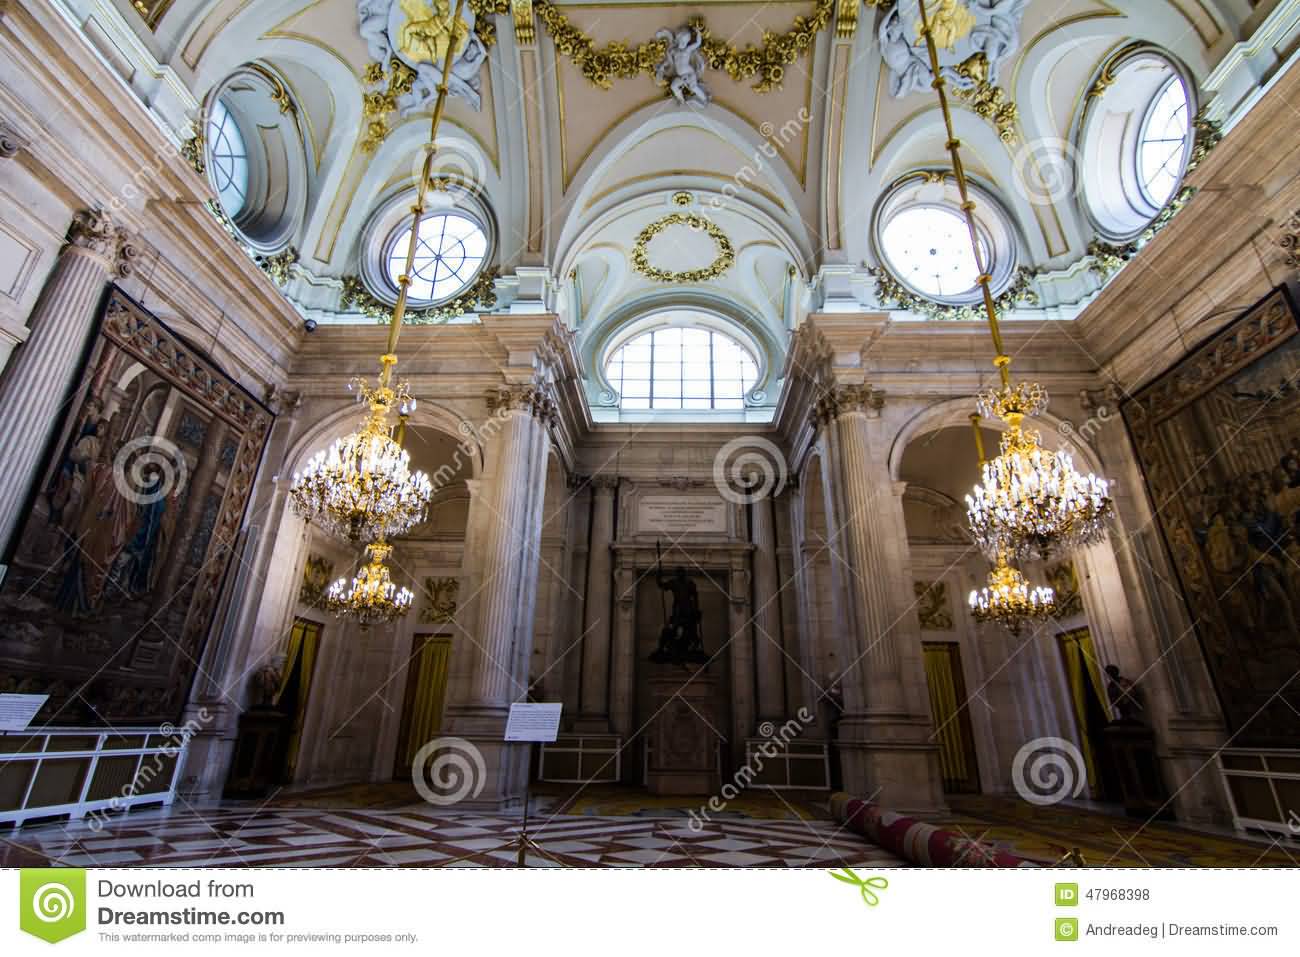 Amazing Room Inside The Royal Palace Of Madrid